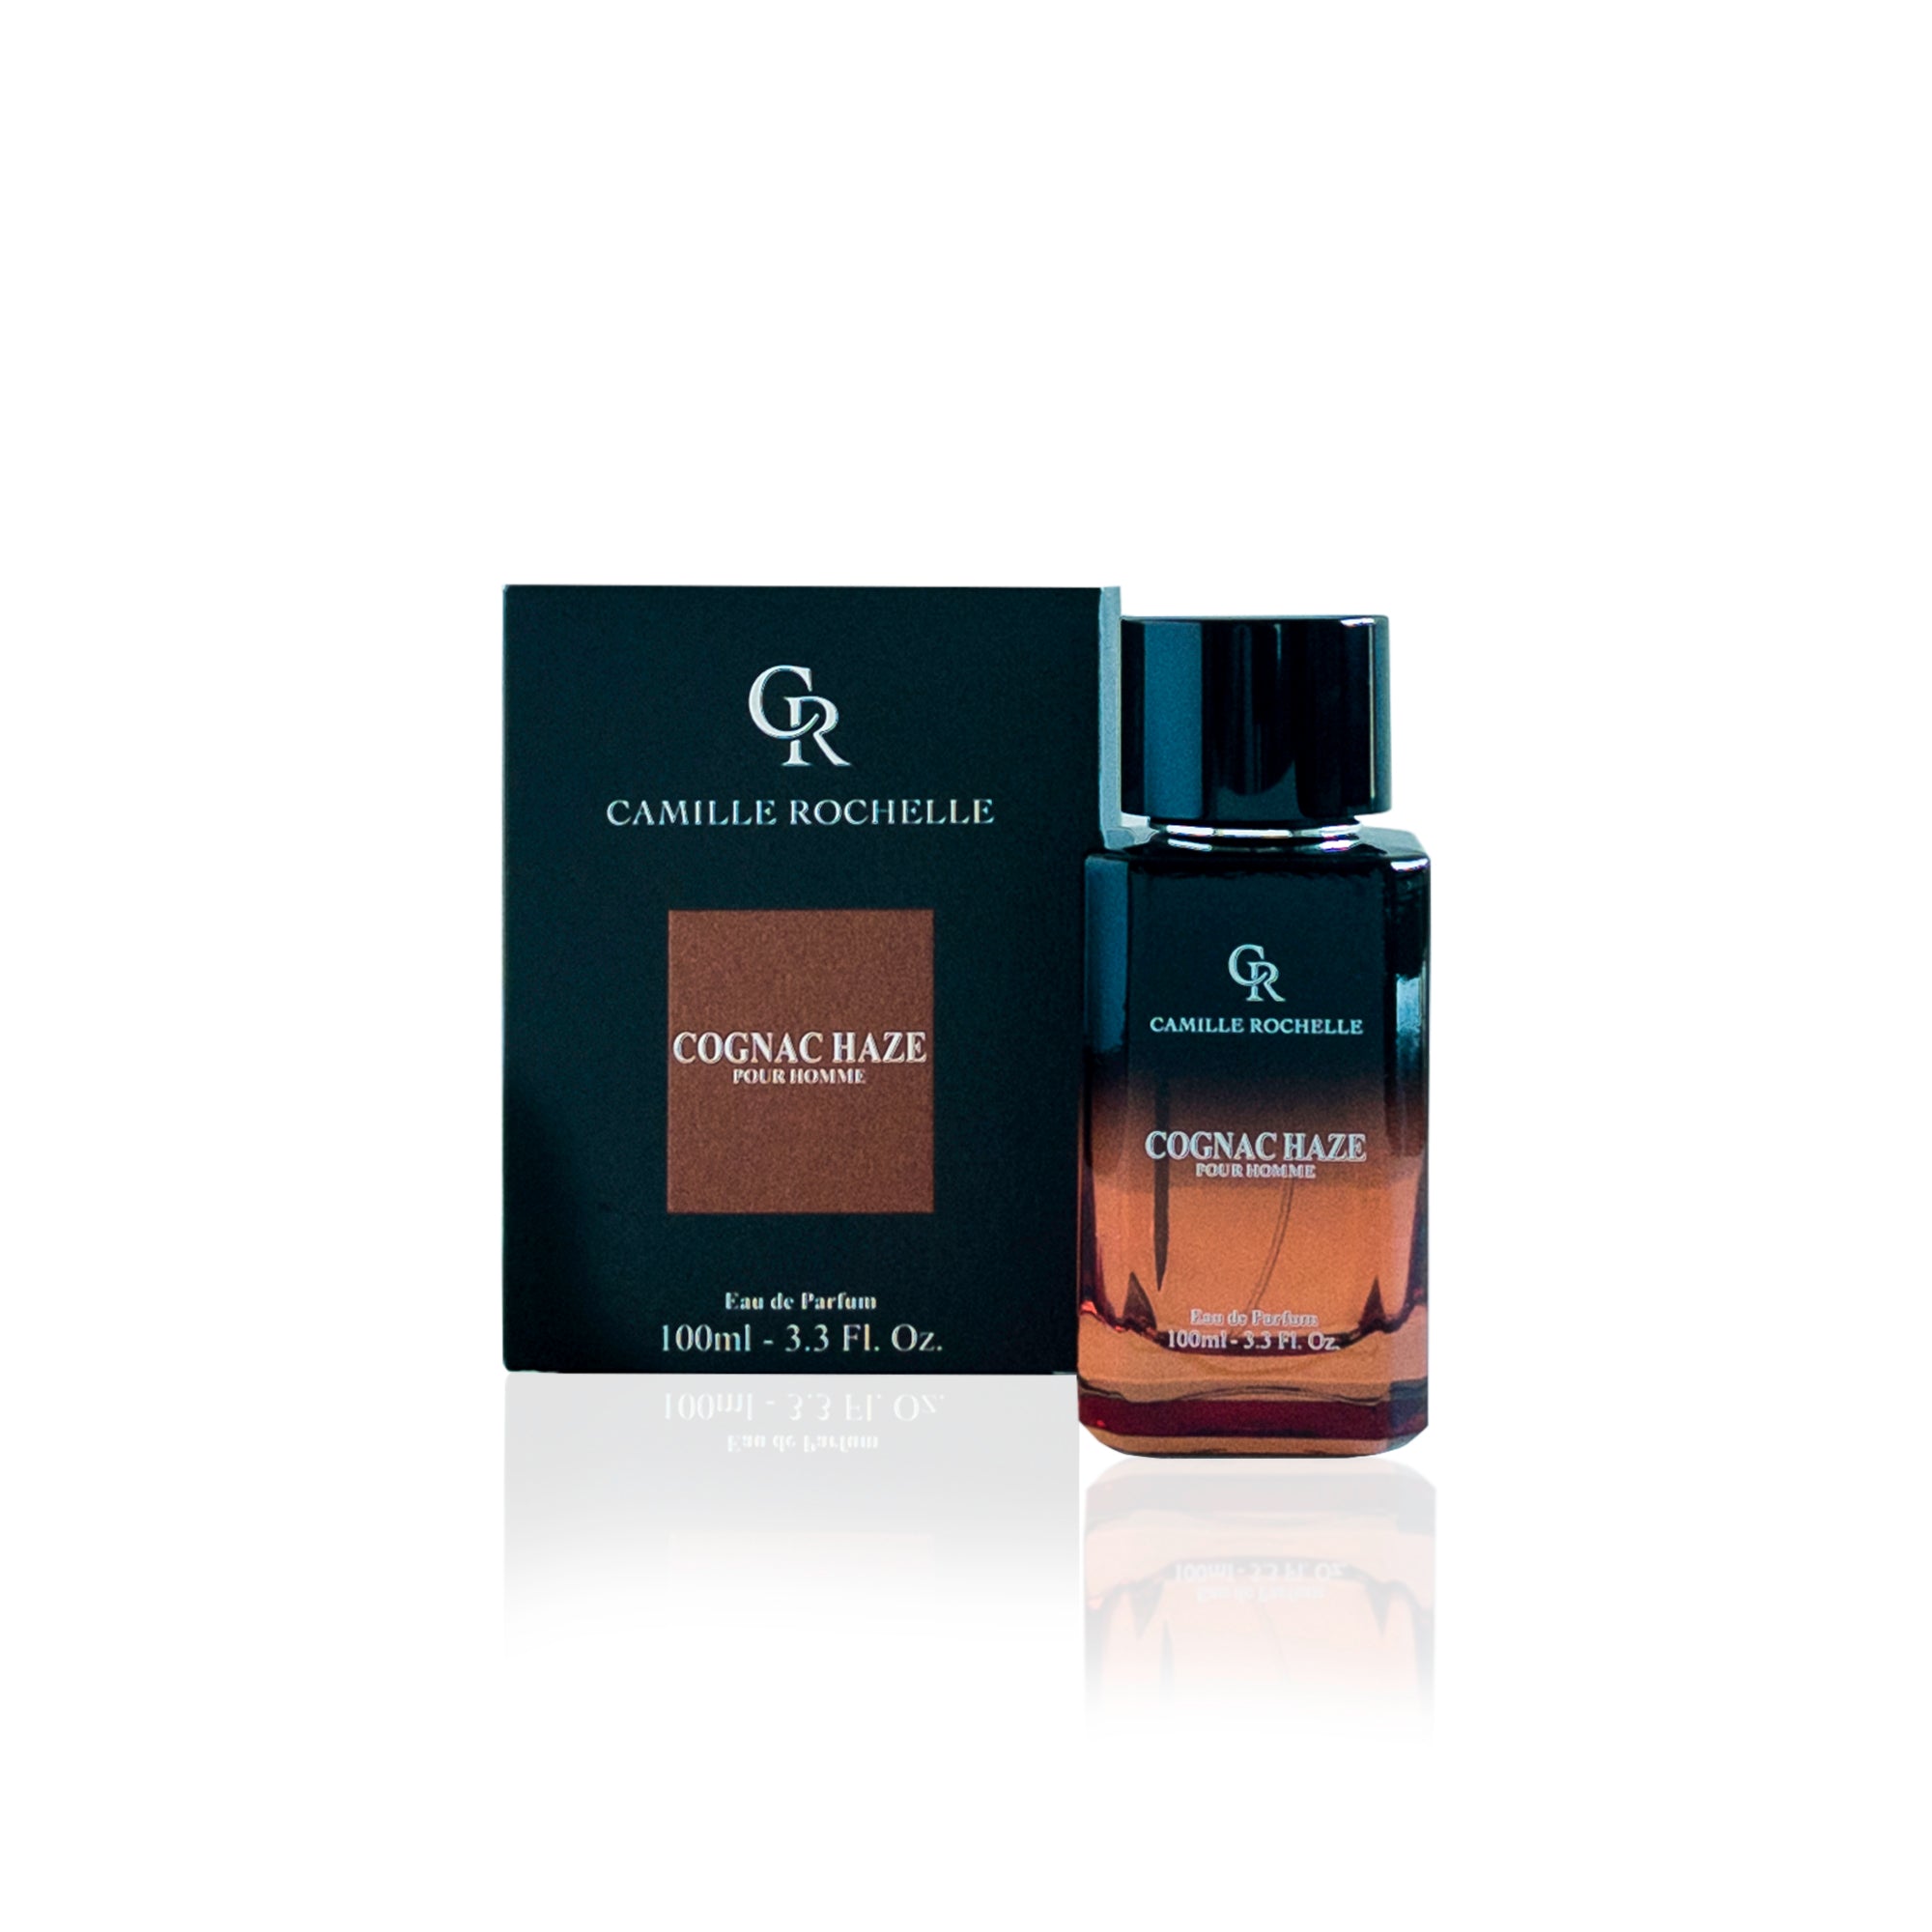 Intense Black Lomani cologne - a fragrance for men 2014